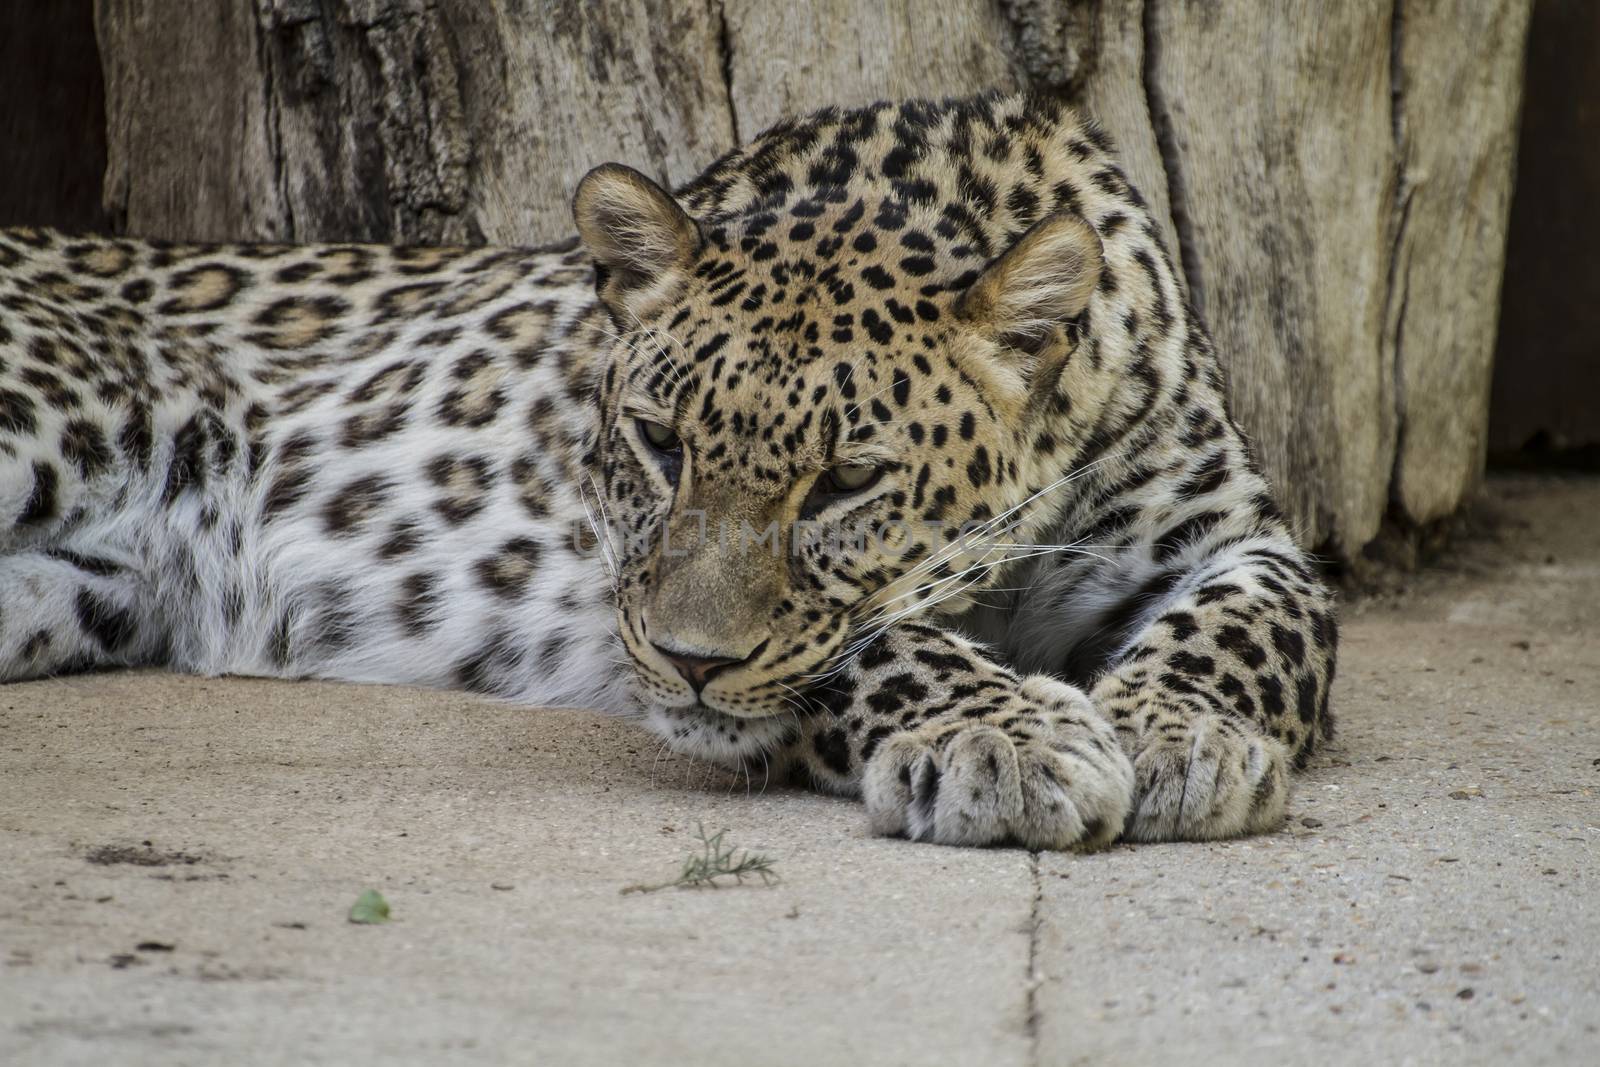 Powerful leopard resting, wildlife mammal with spot skin by FernandoCortes